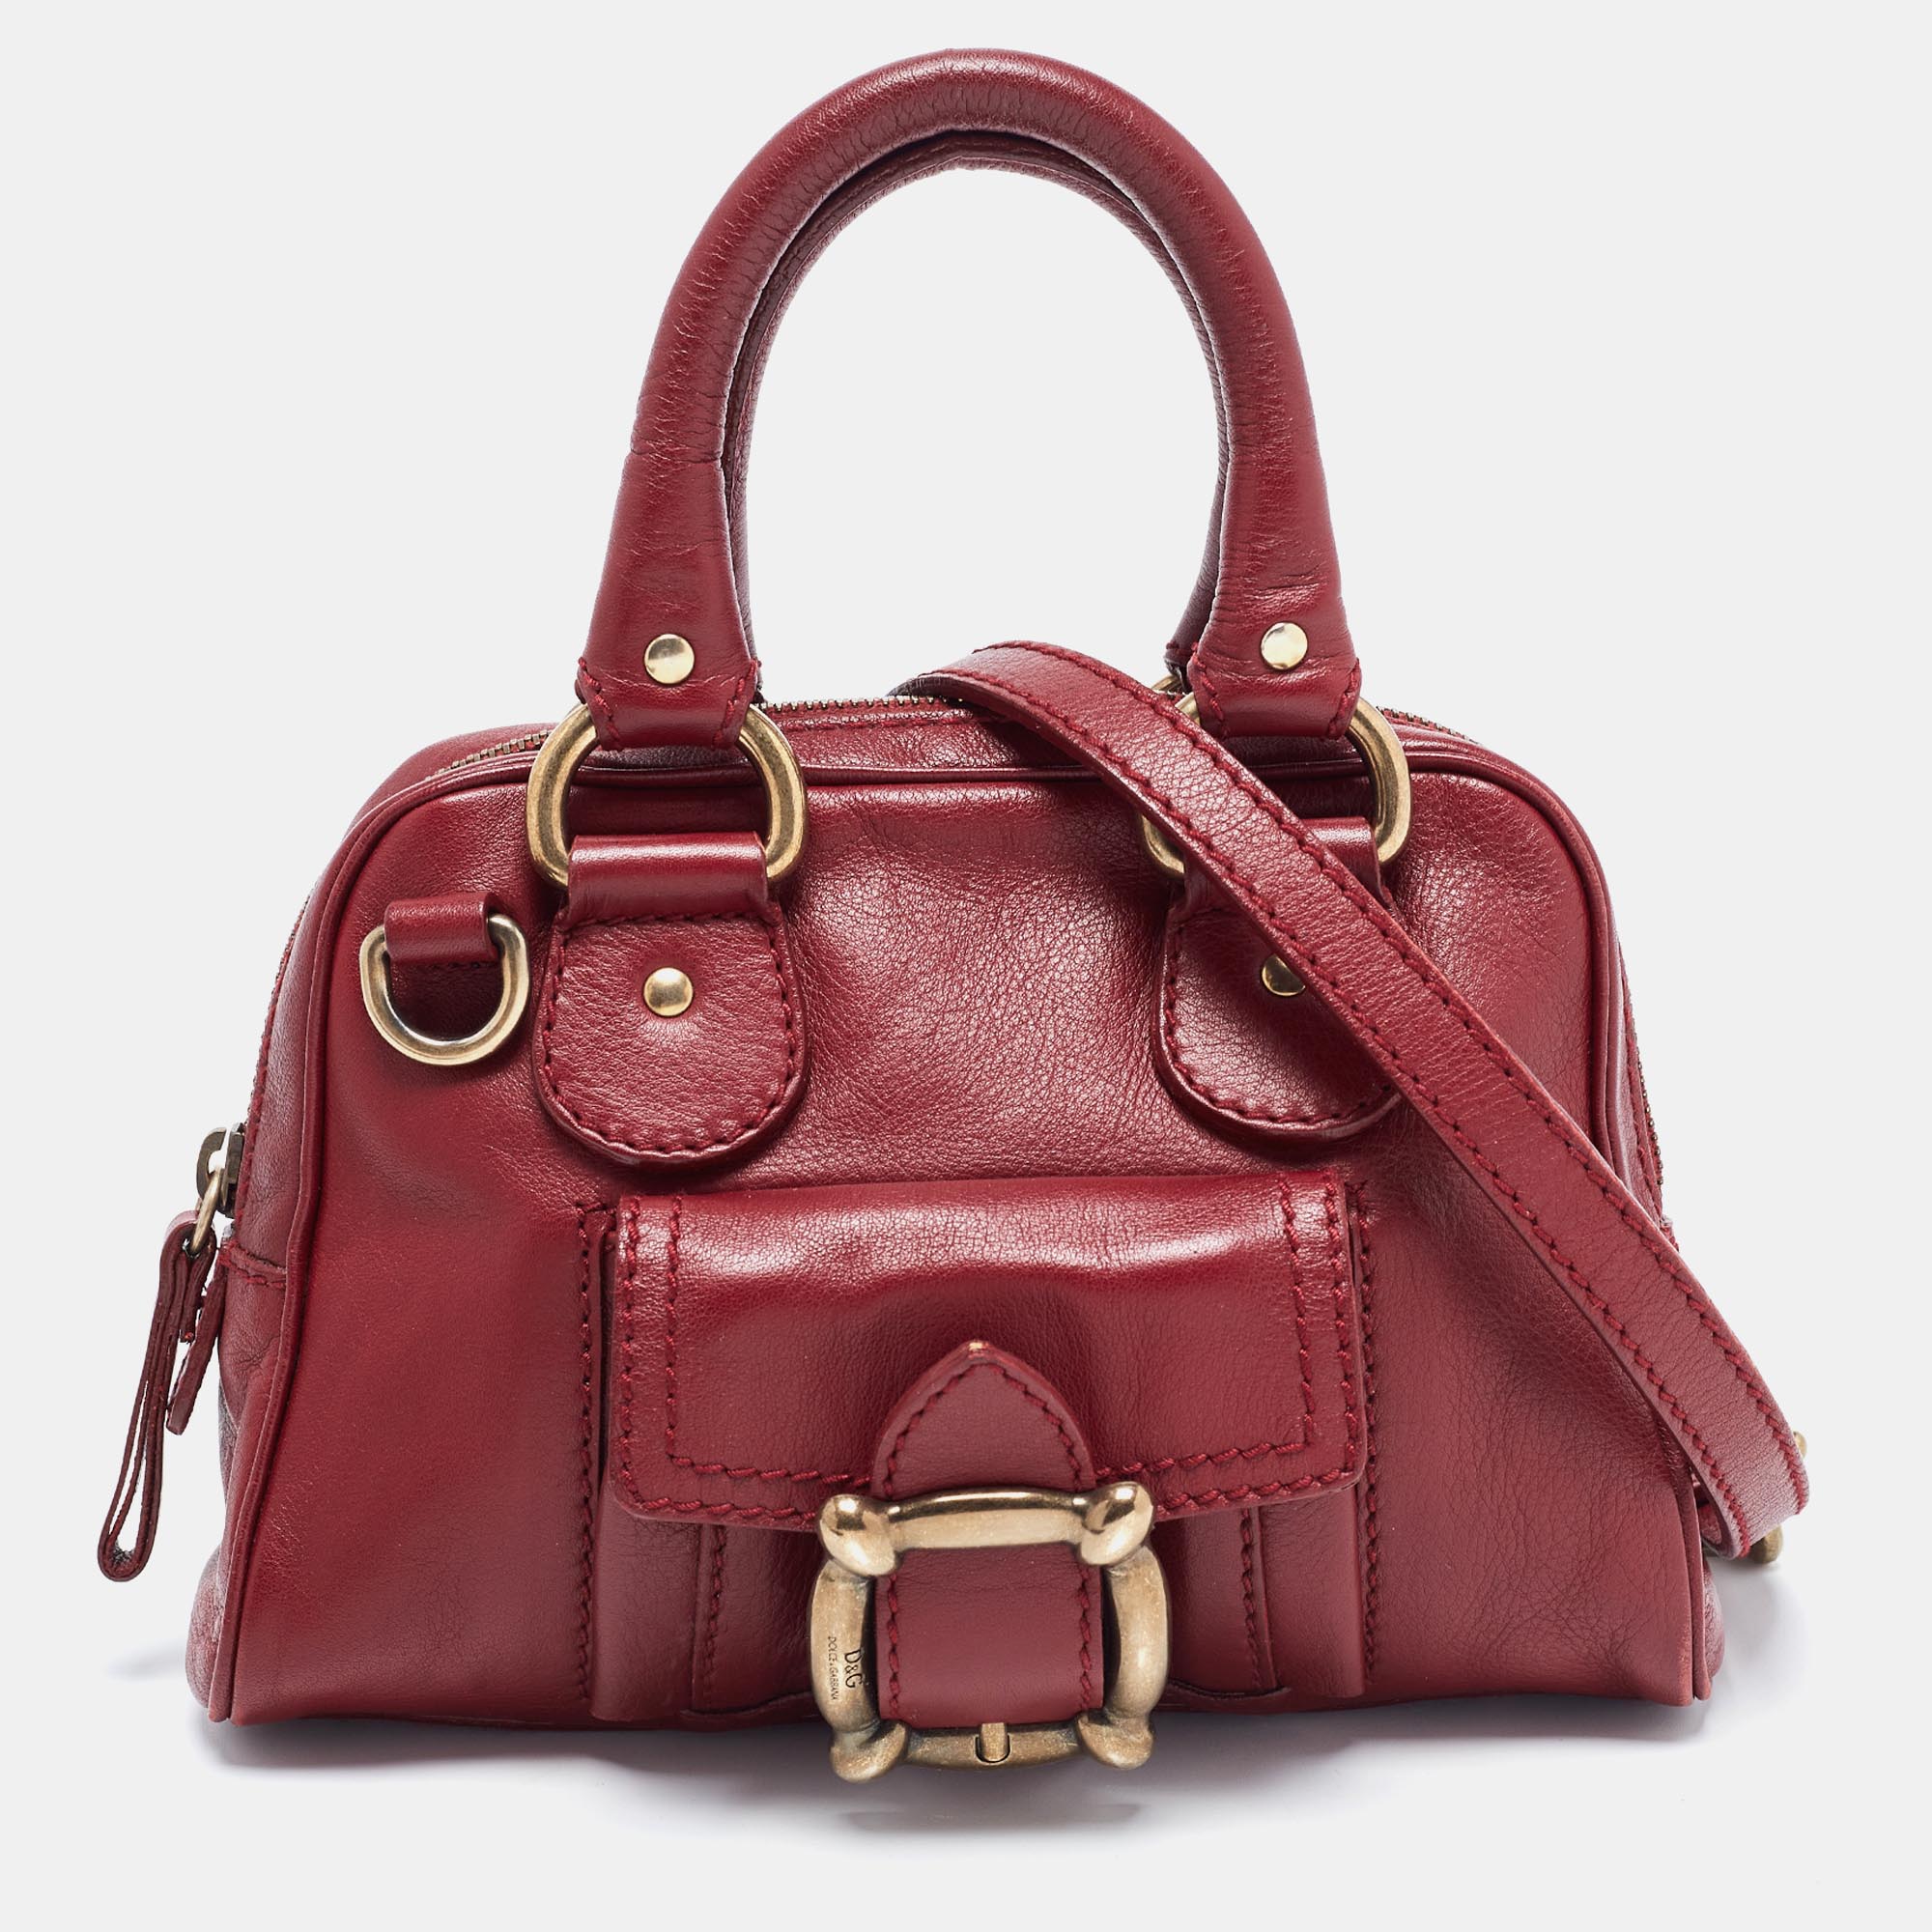 D&g maroon leather satchel